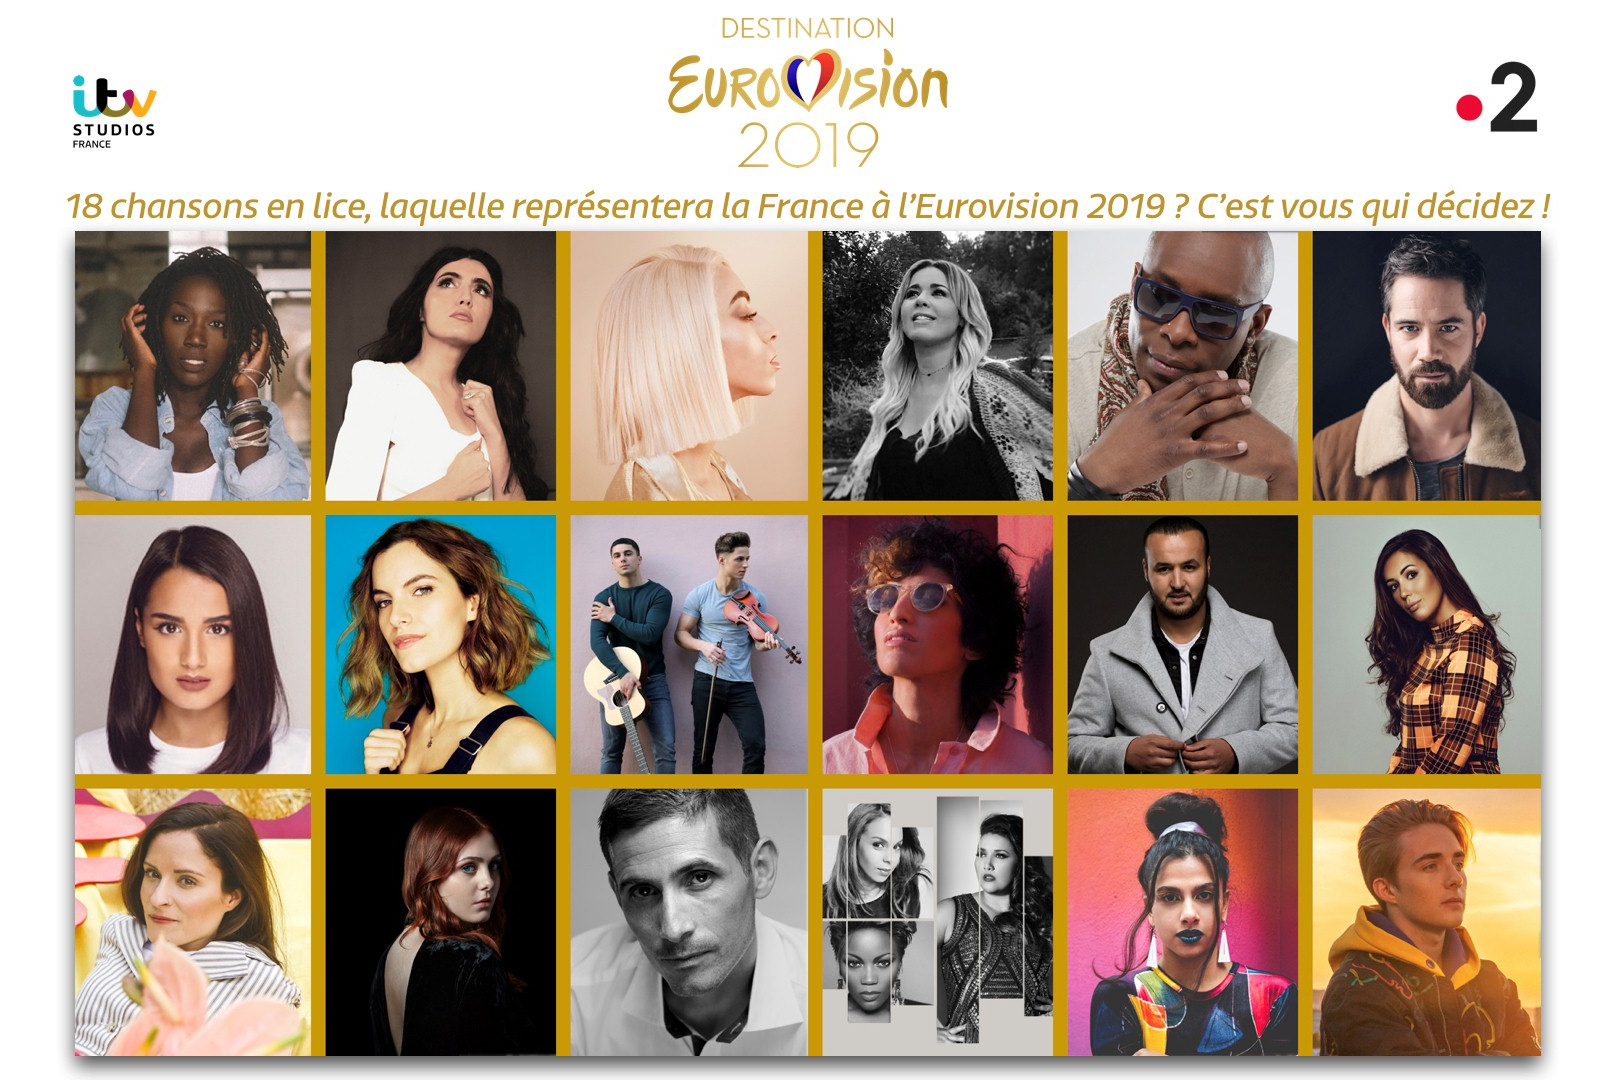 Destination eurovision